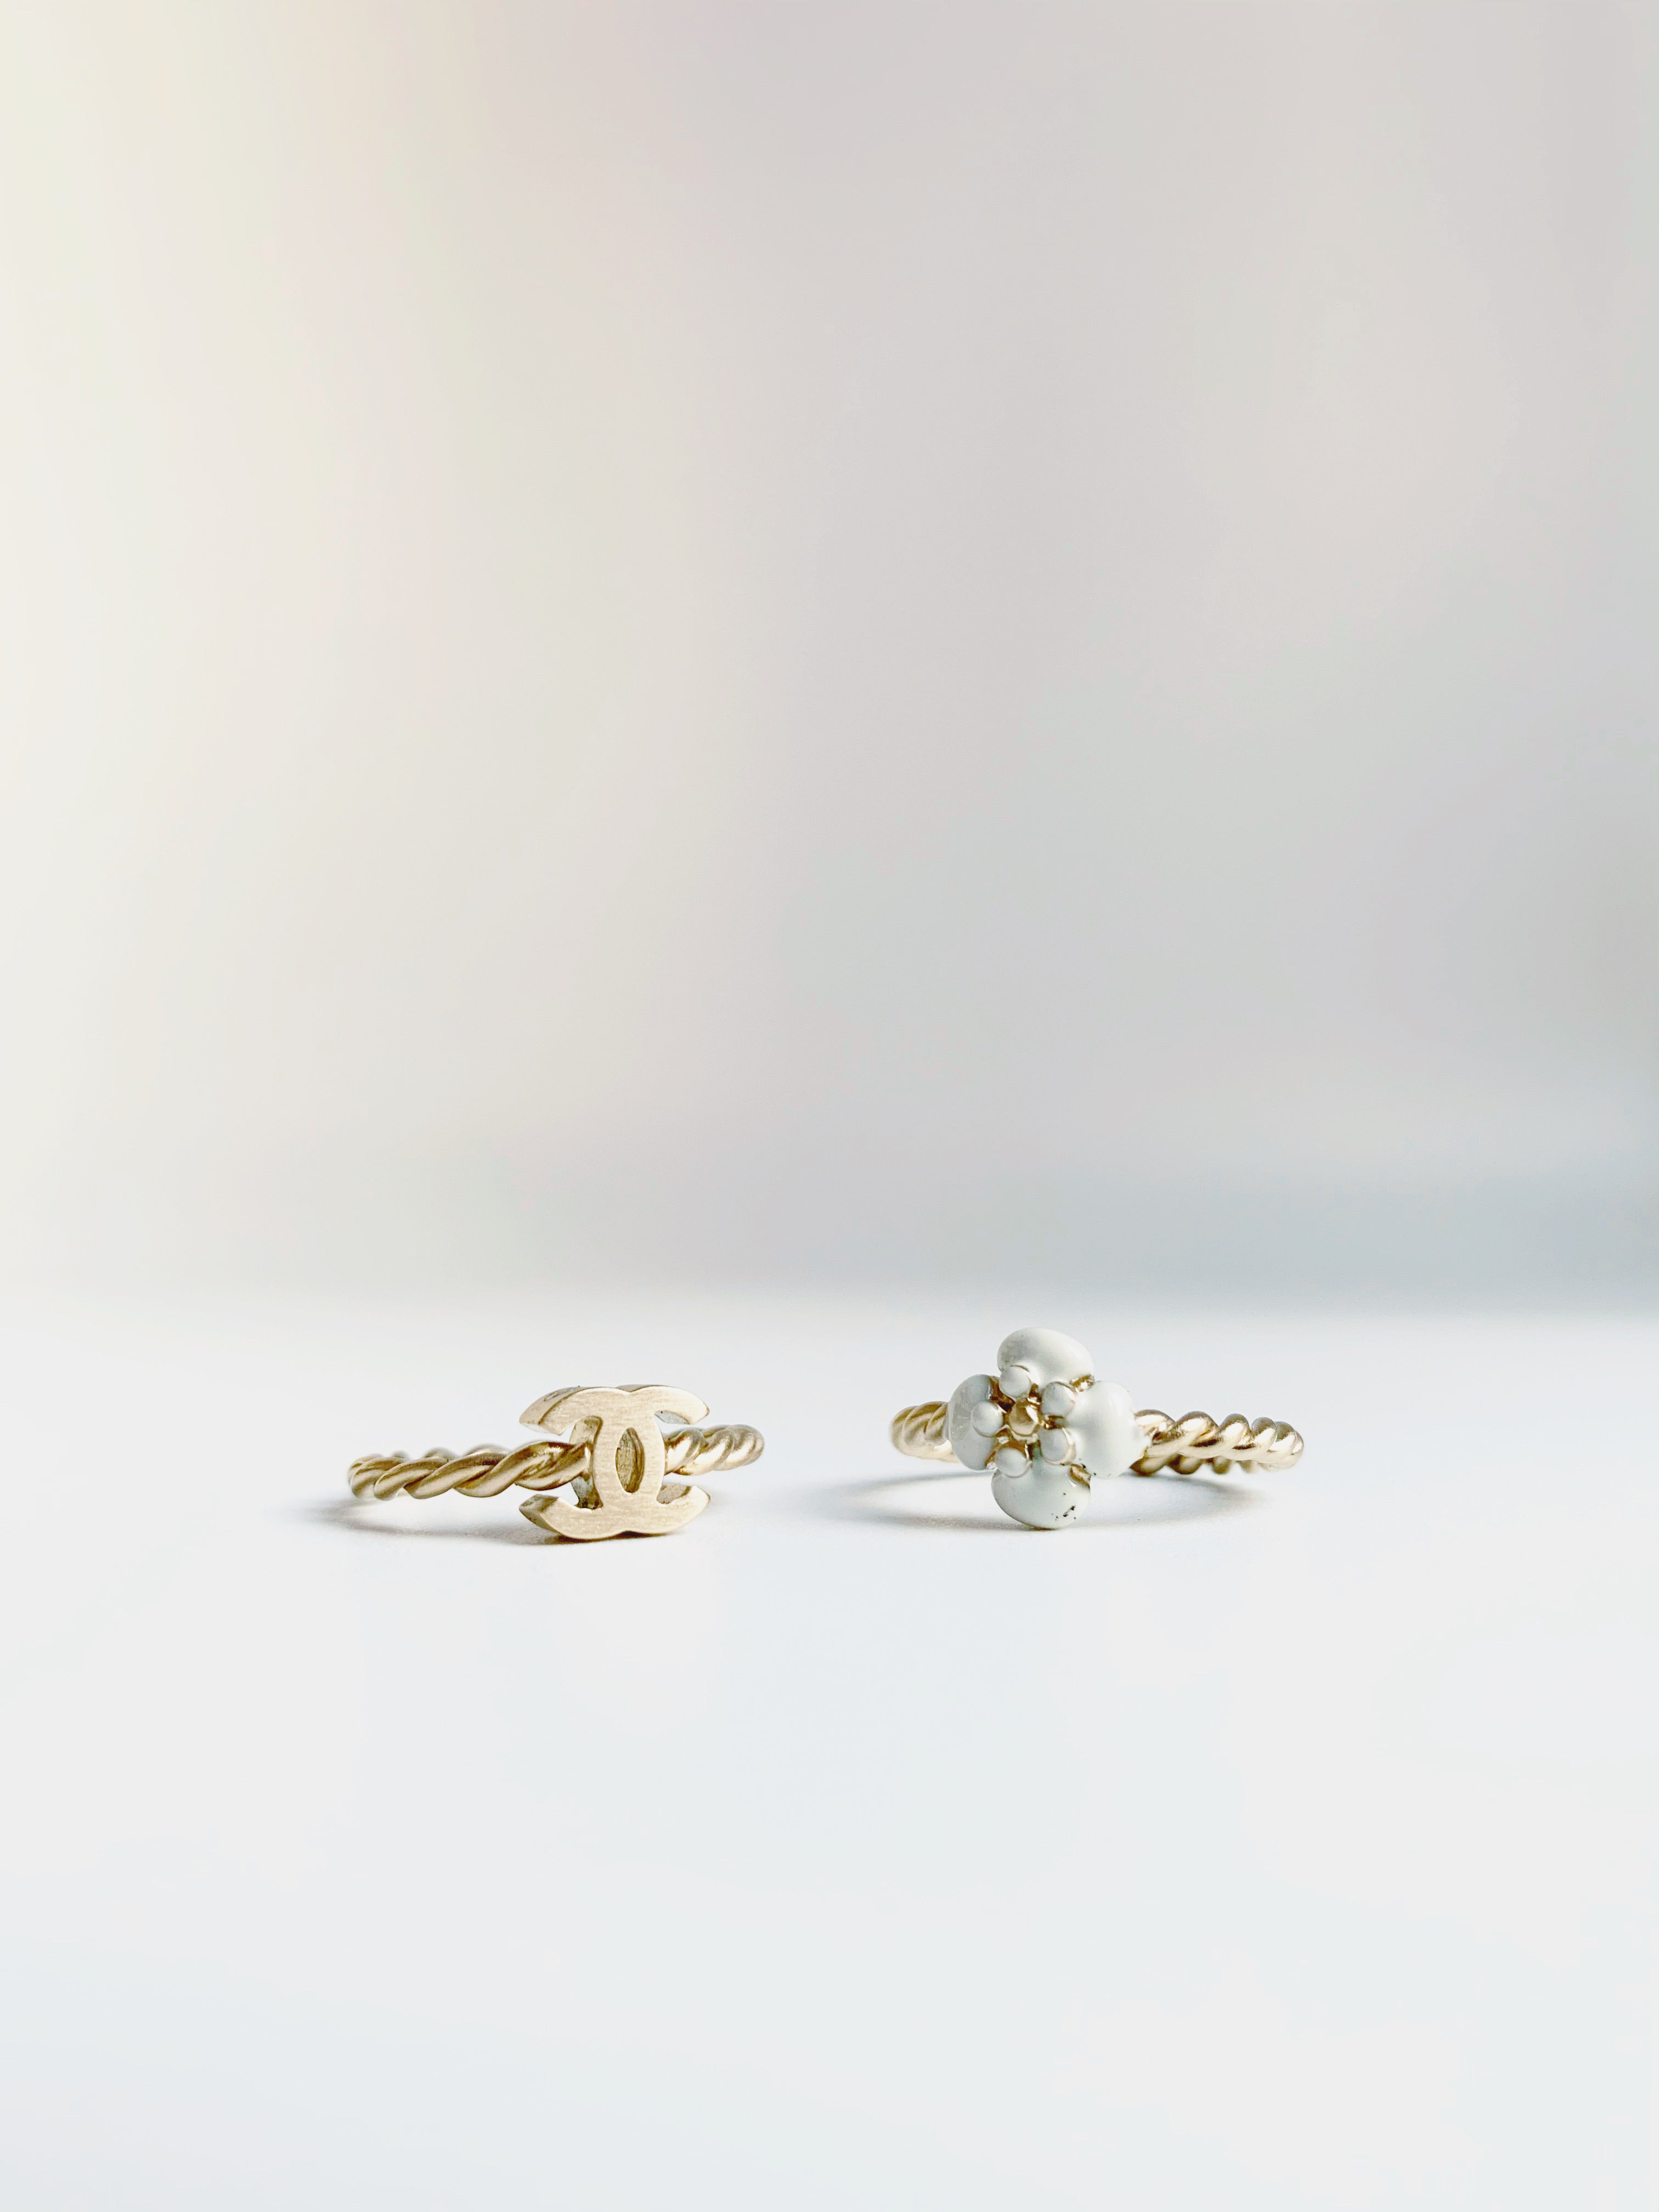 Chanel Enamel Camellia CC Ring Set Gold White (2 rings only